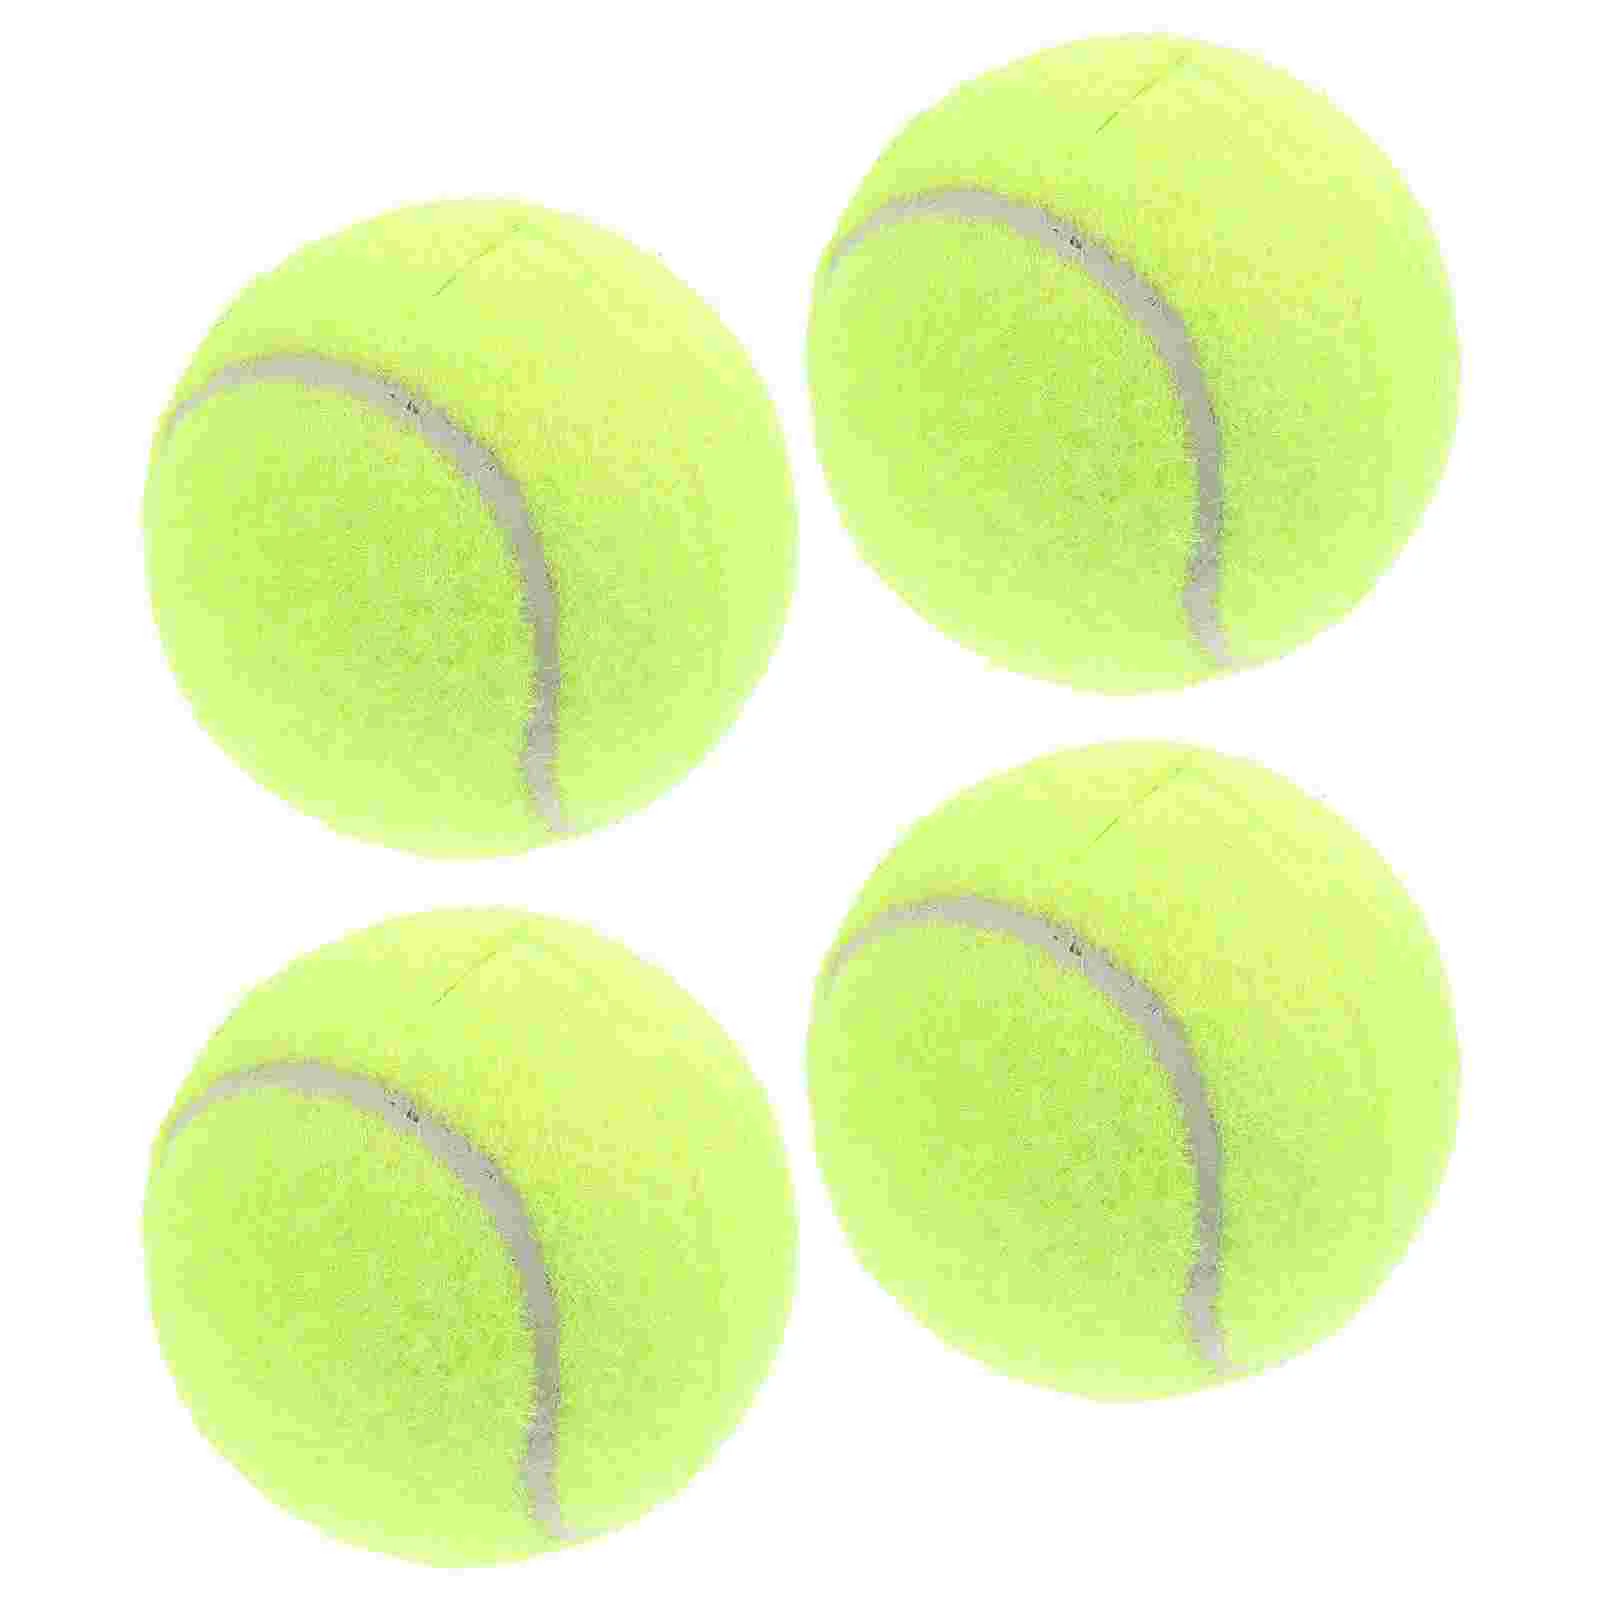 

4 Pcs An Fittings Walker Tennis Ball Glides Precut Balls for Chairs Walkers Seniors Fluorescent Color Legs Replacement